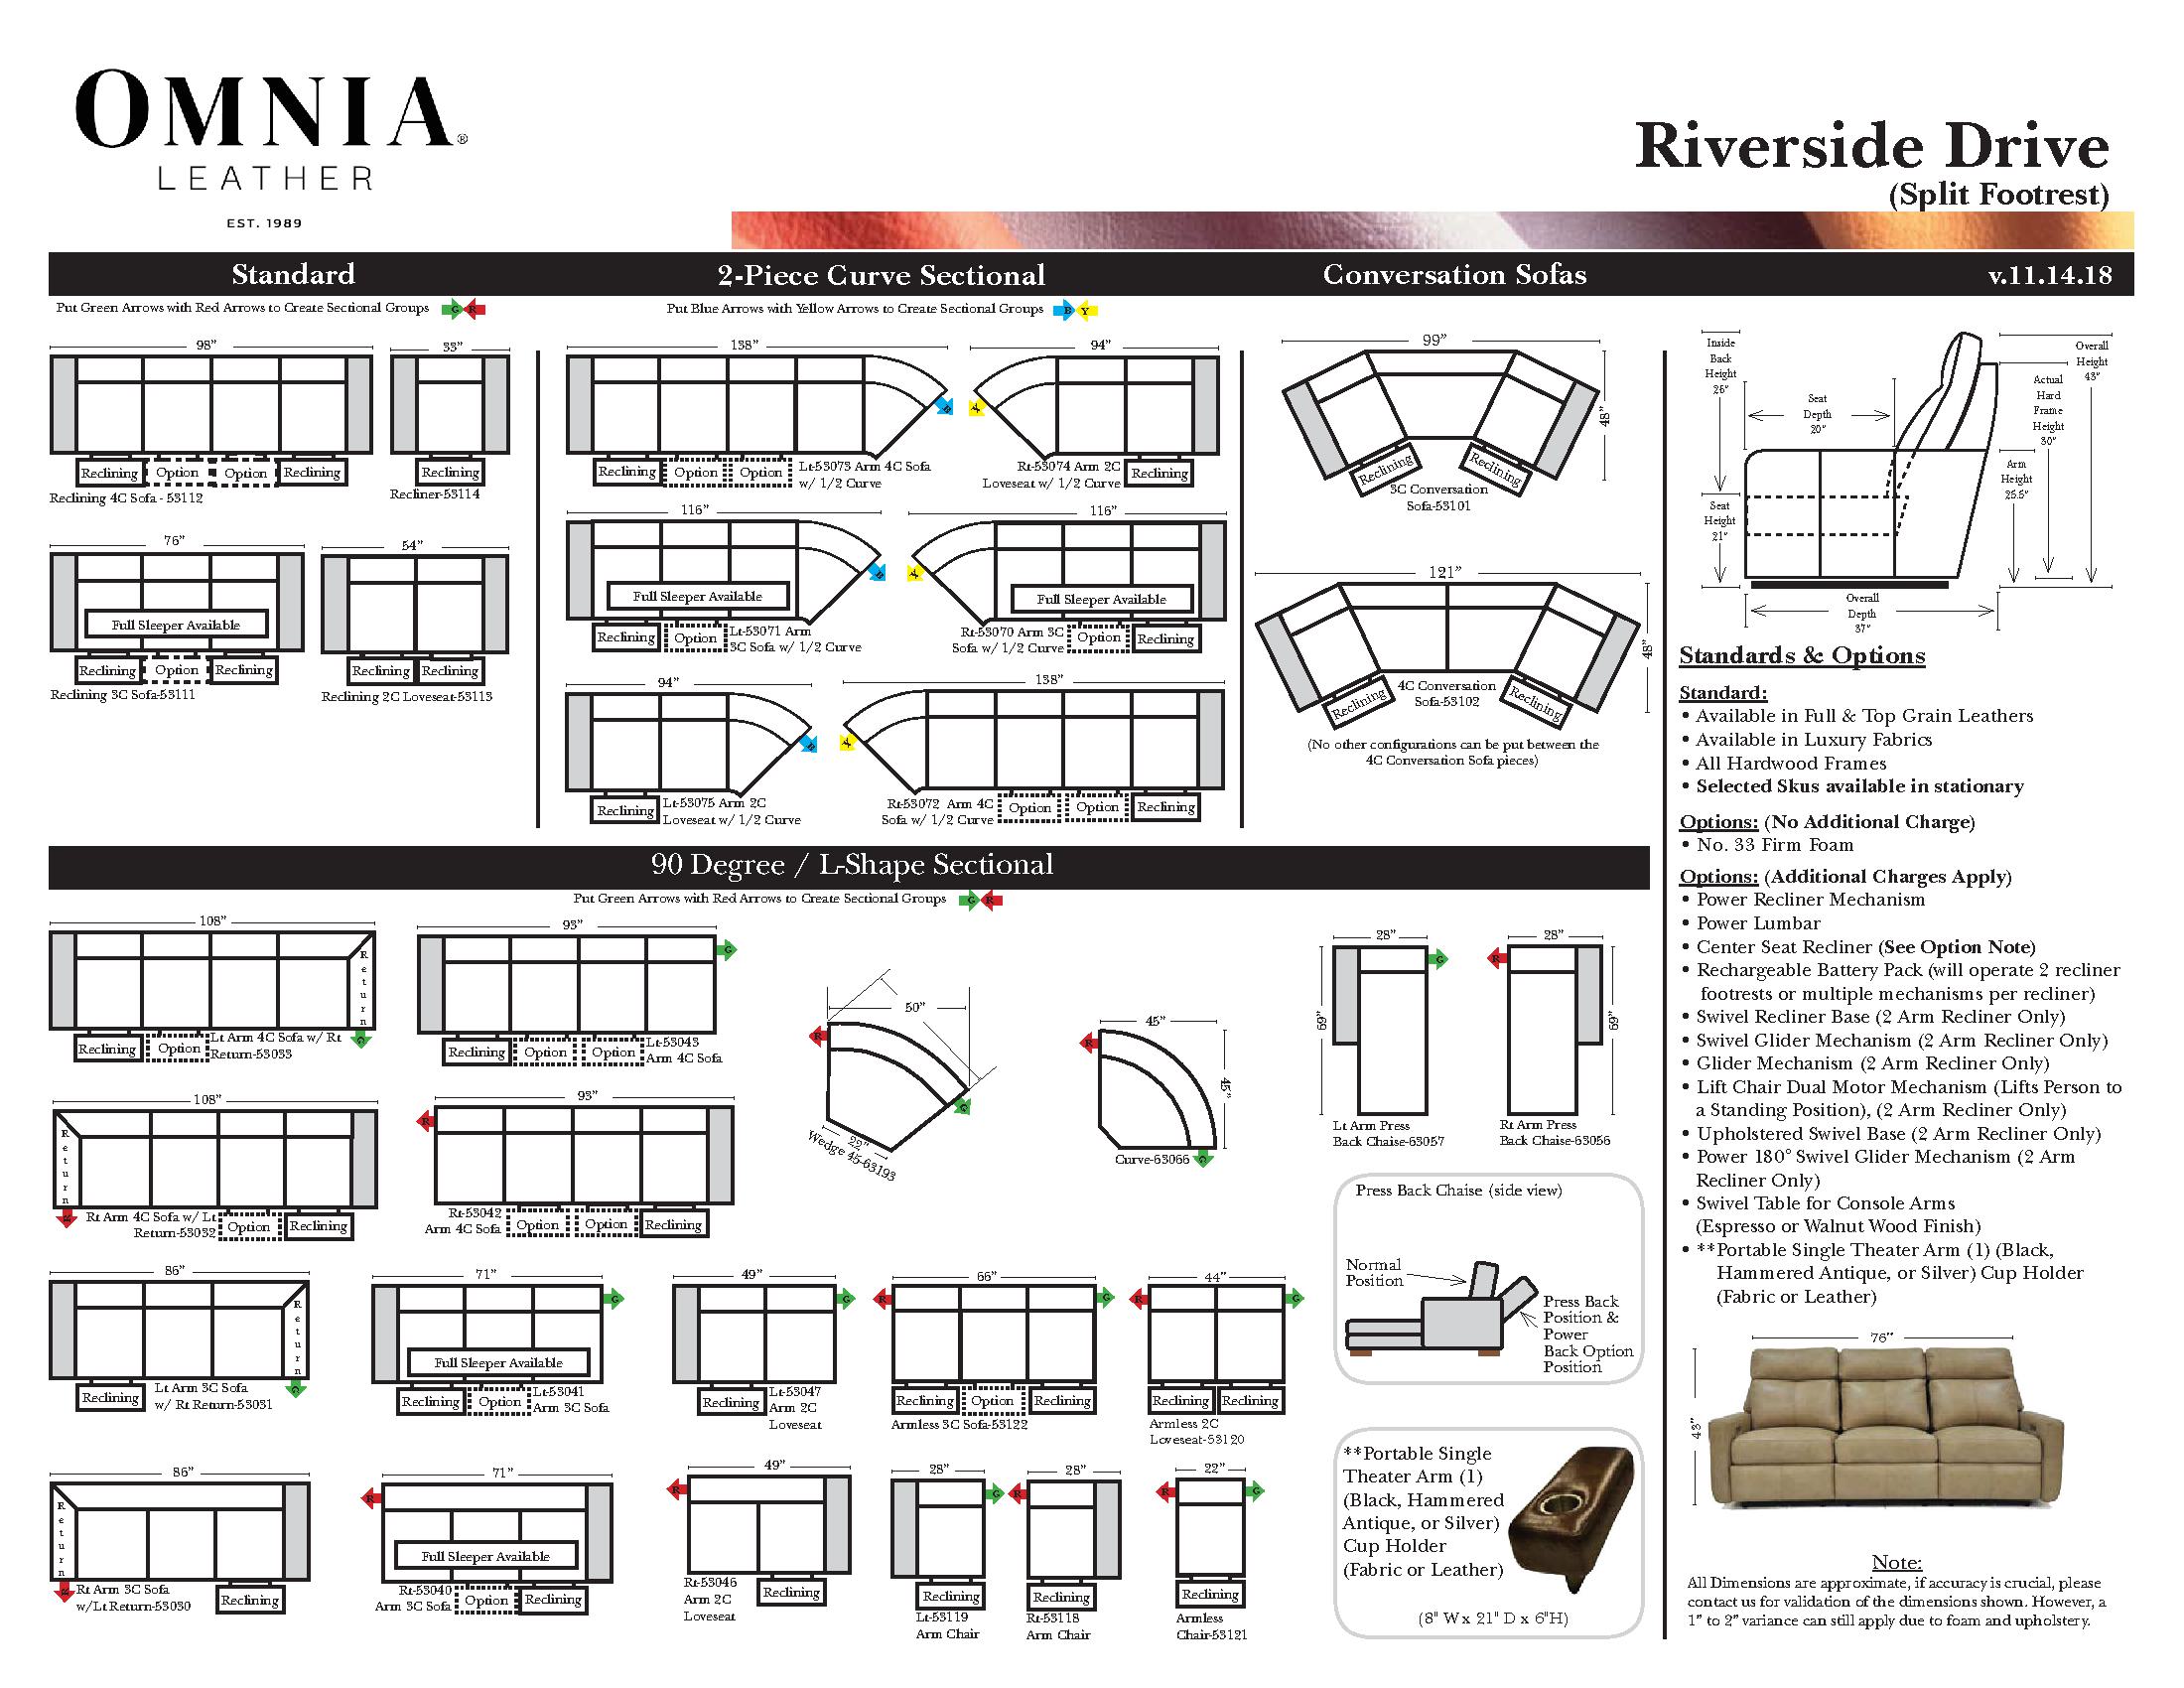 Riverside Drive Omnia layout